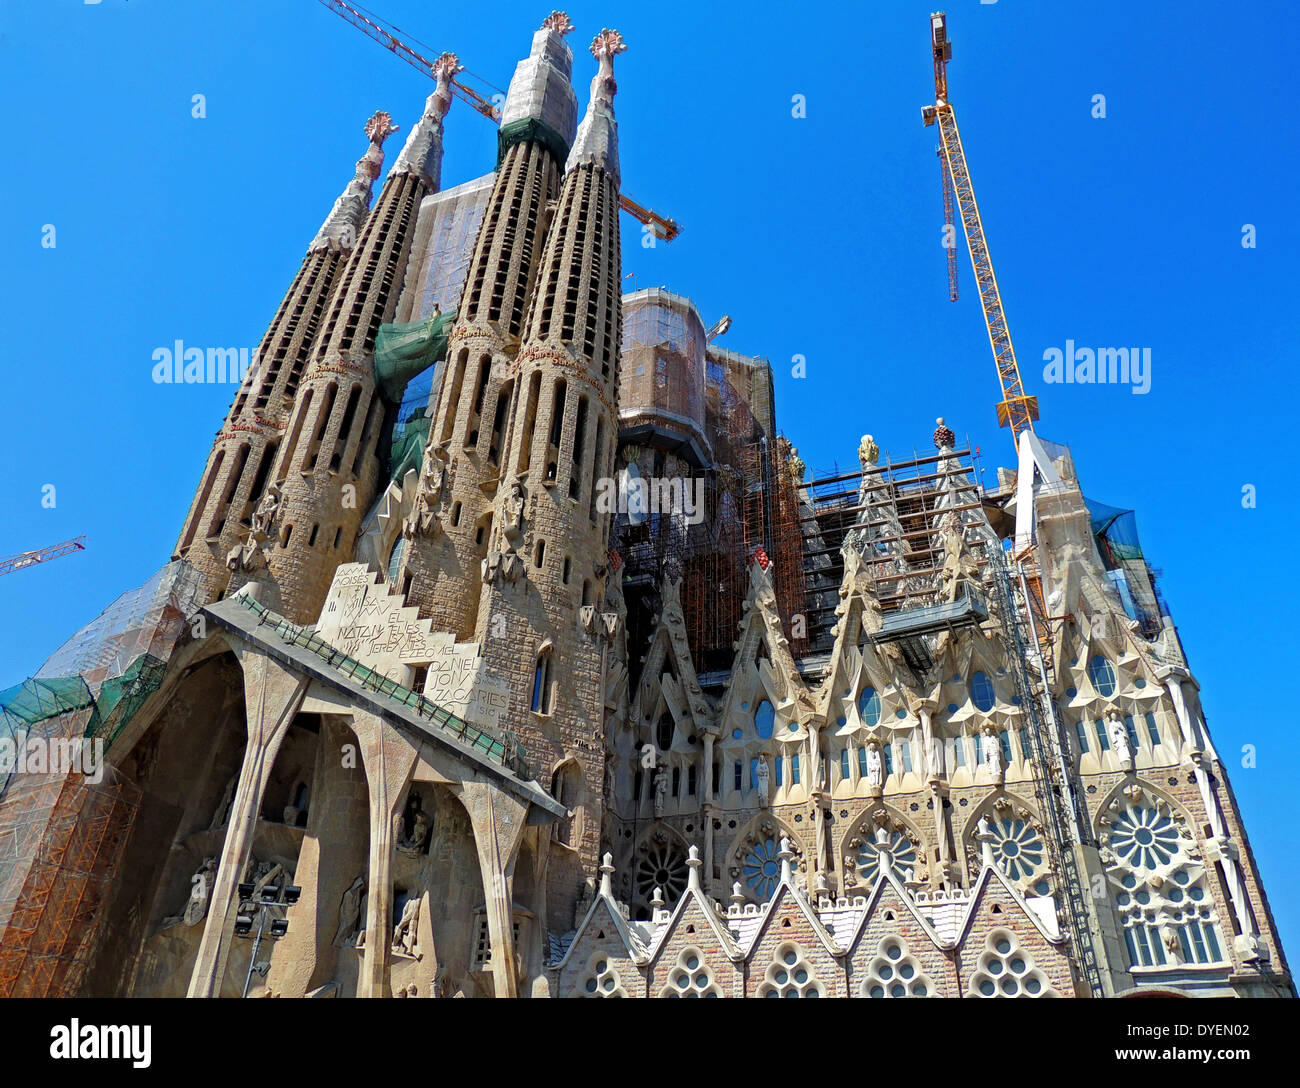 Sagrada familia Cathedral in Barcelona. The Basilica i Temple Expiatori ...